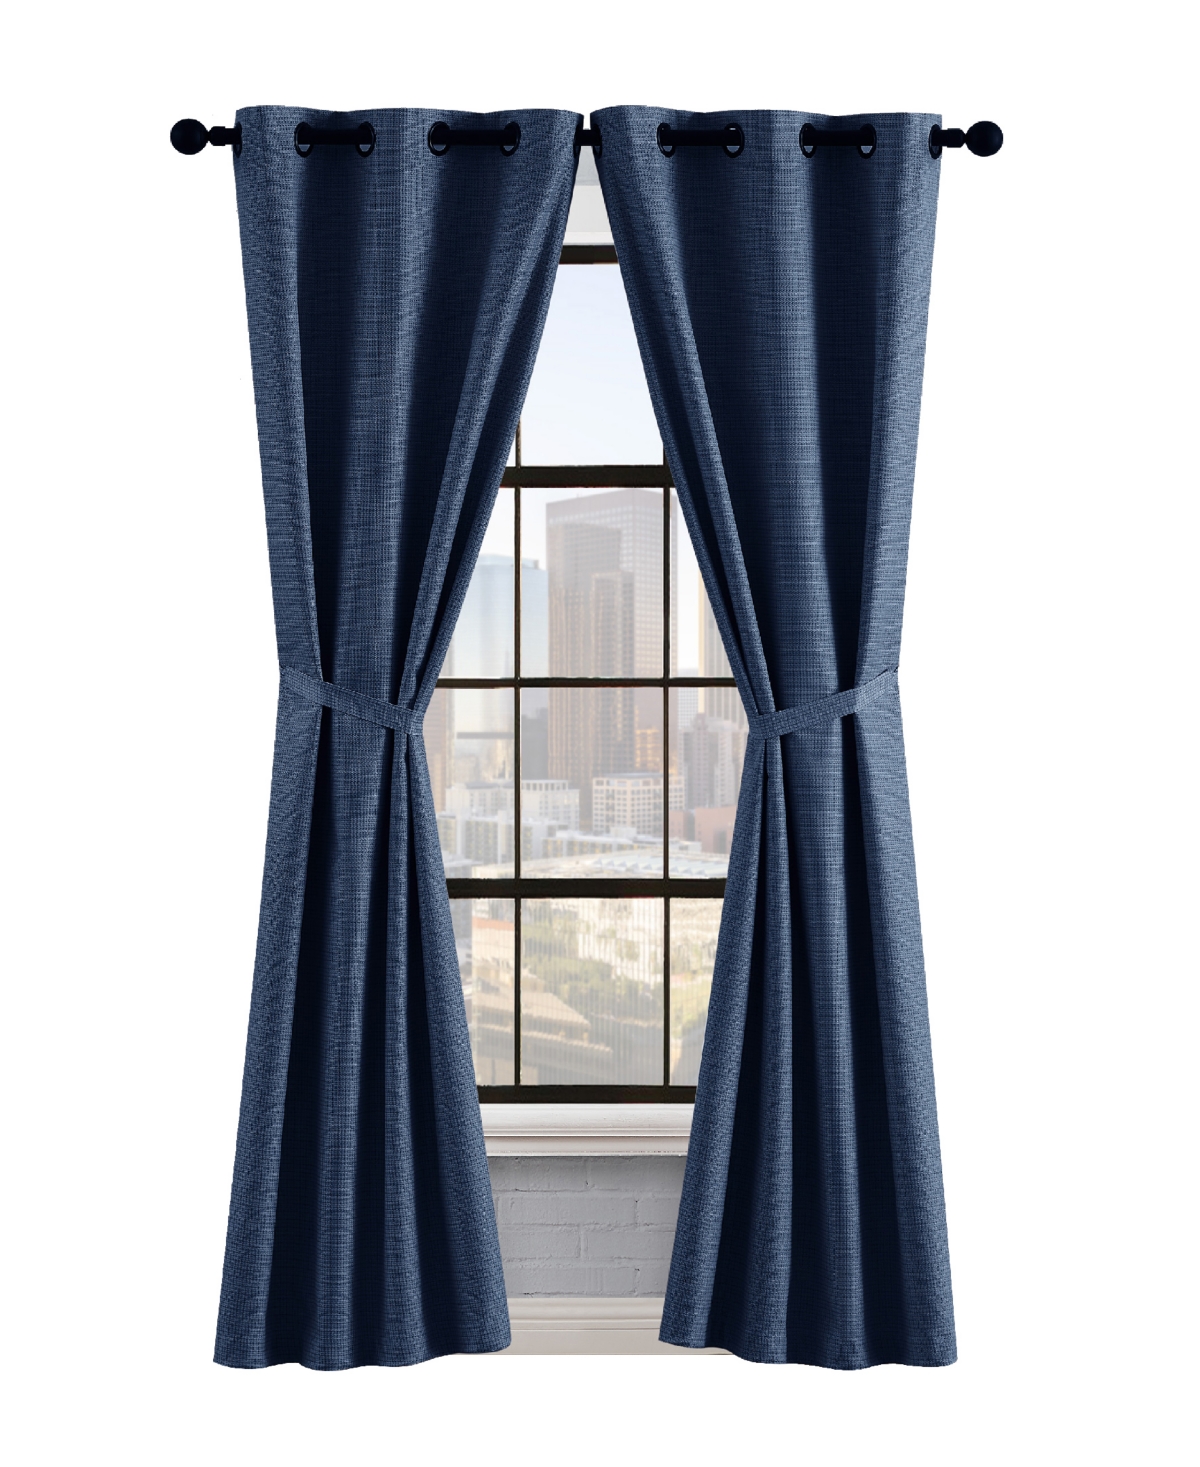 Lucky Brand Finley Textured Blackout Grommet Window Curtain Panel Pair With Tiebacks, 38" X 96" In Indigo Blue